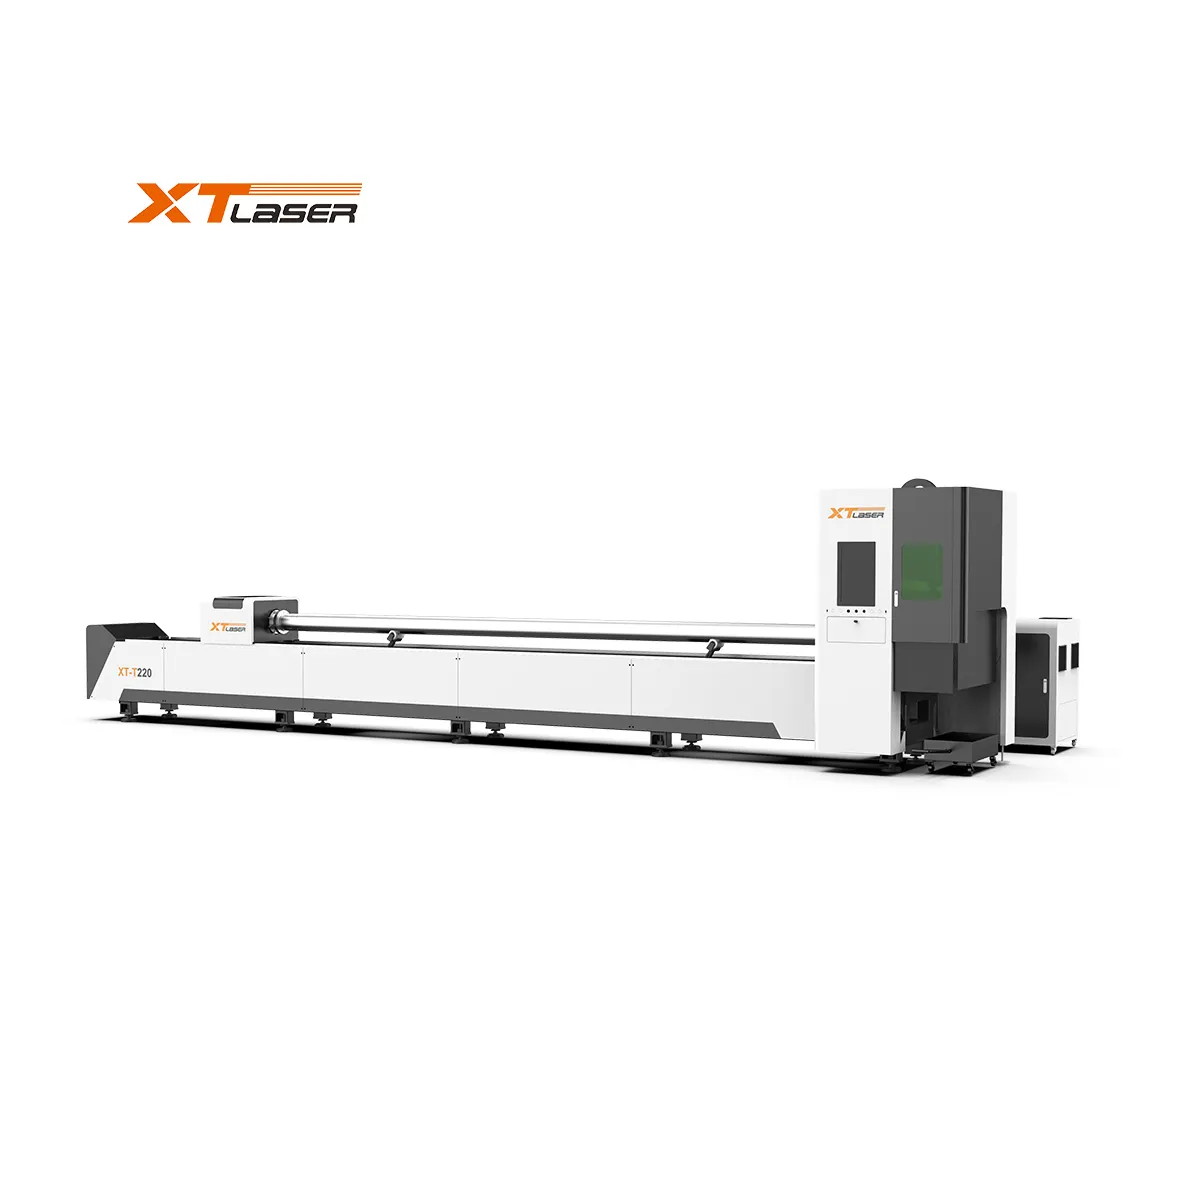 XTLASER 6000w 파이프 레이저 절단기 금속 스틸 스테인레스 튜브 레이저 커터 하이 퀄리티